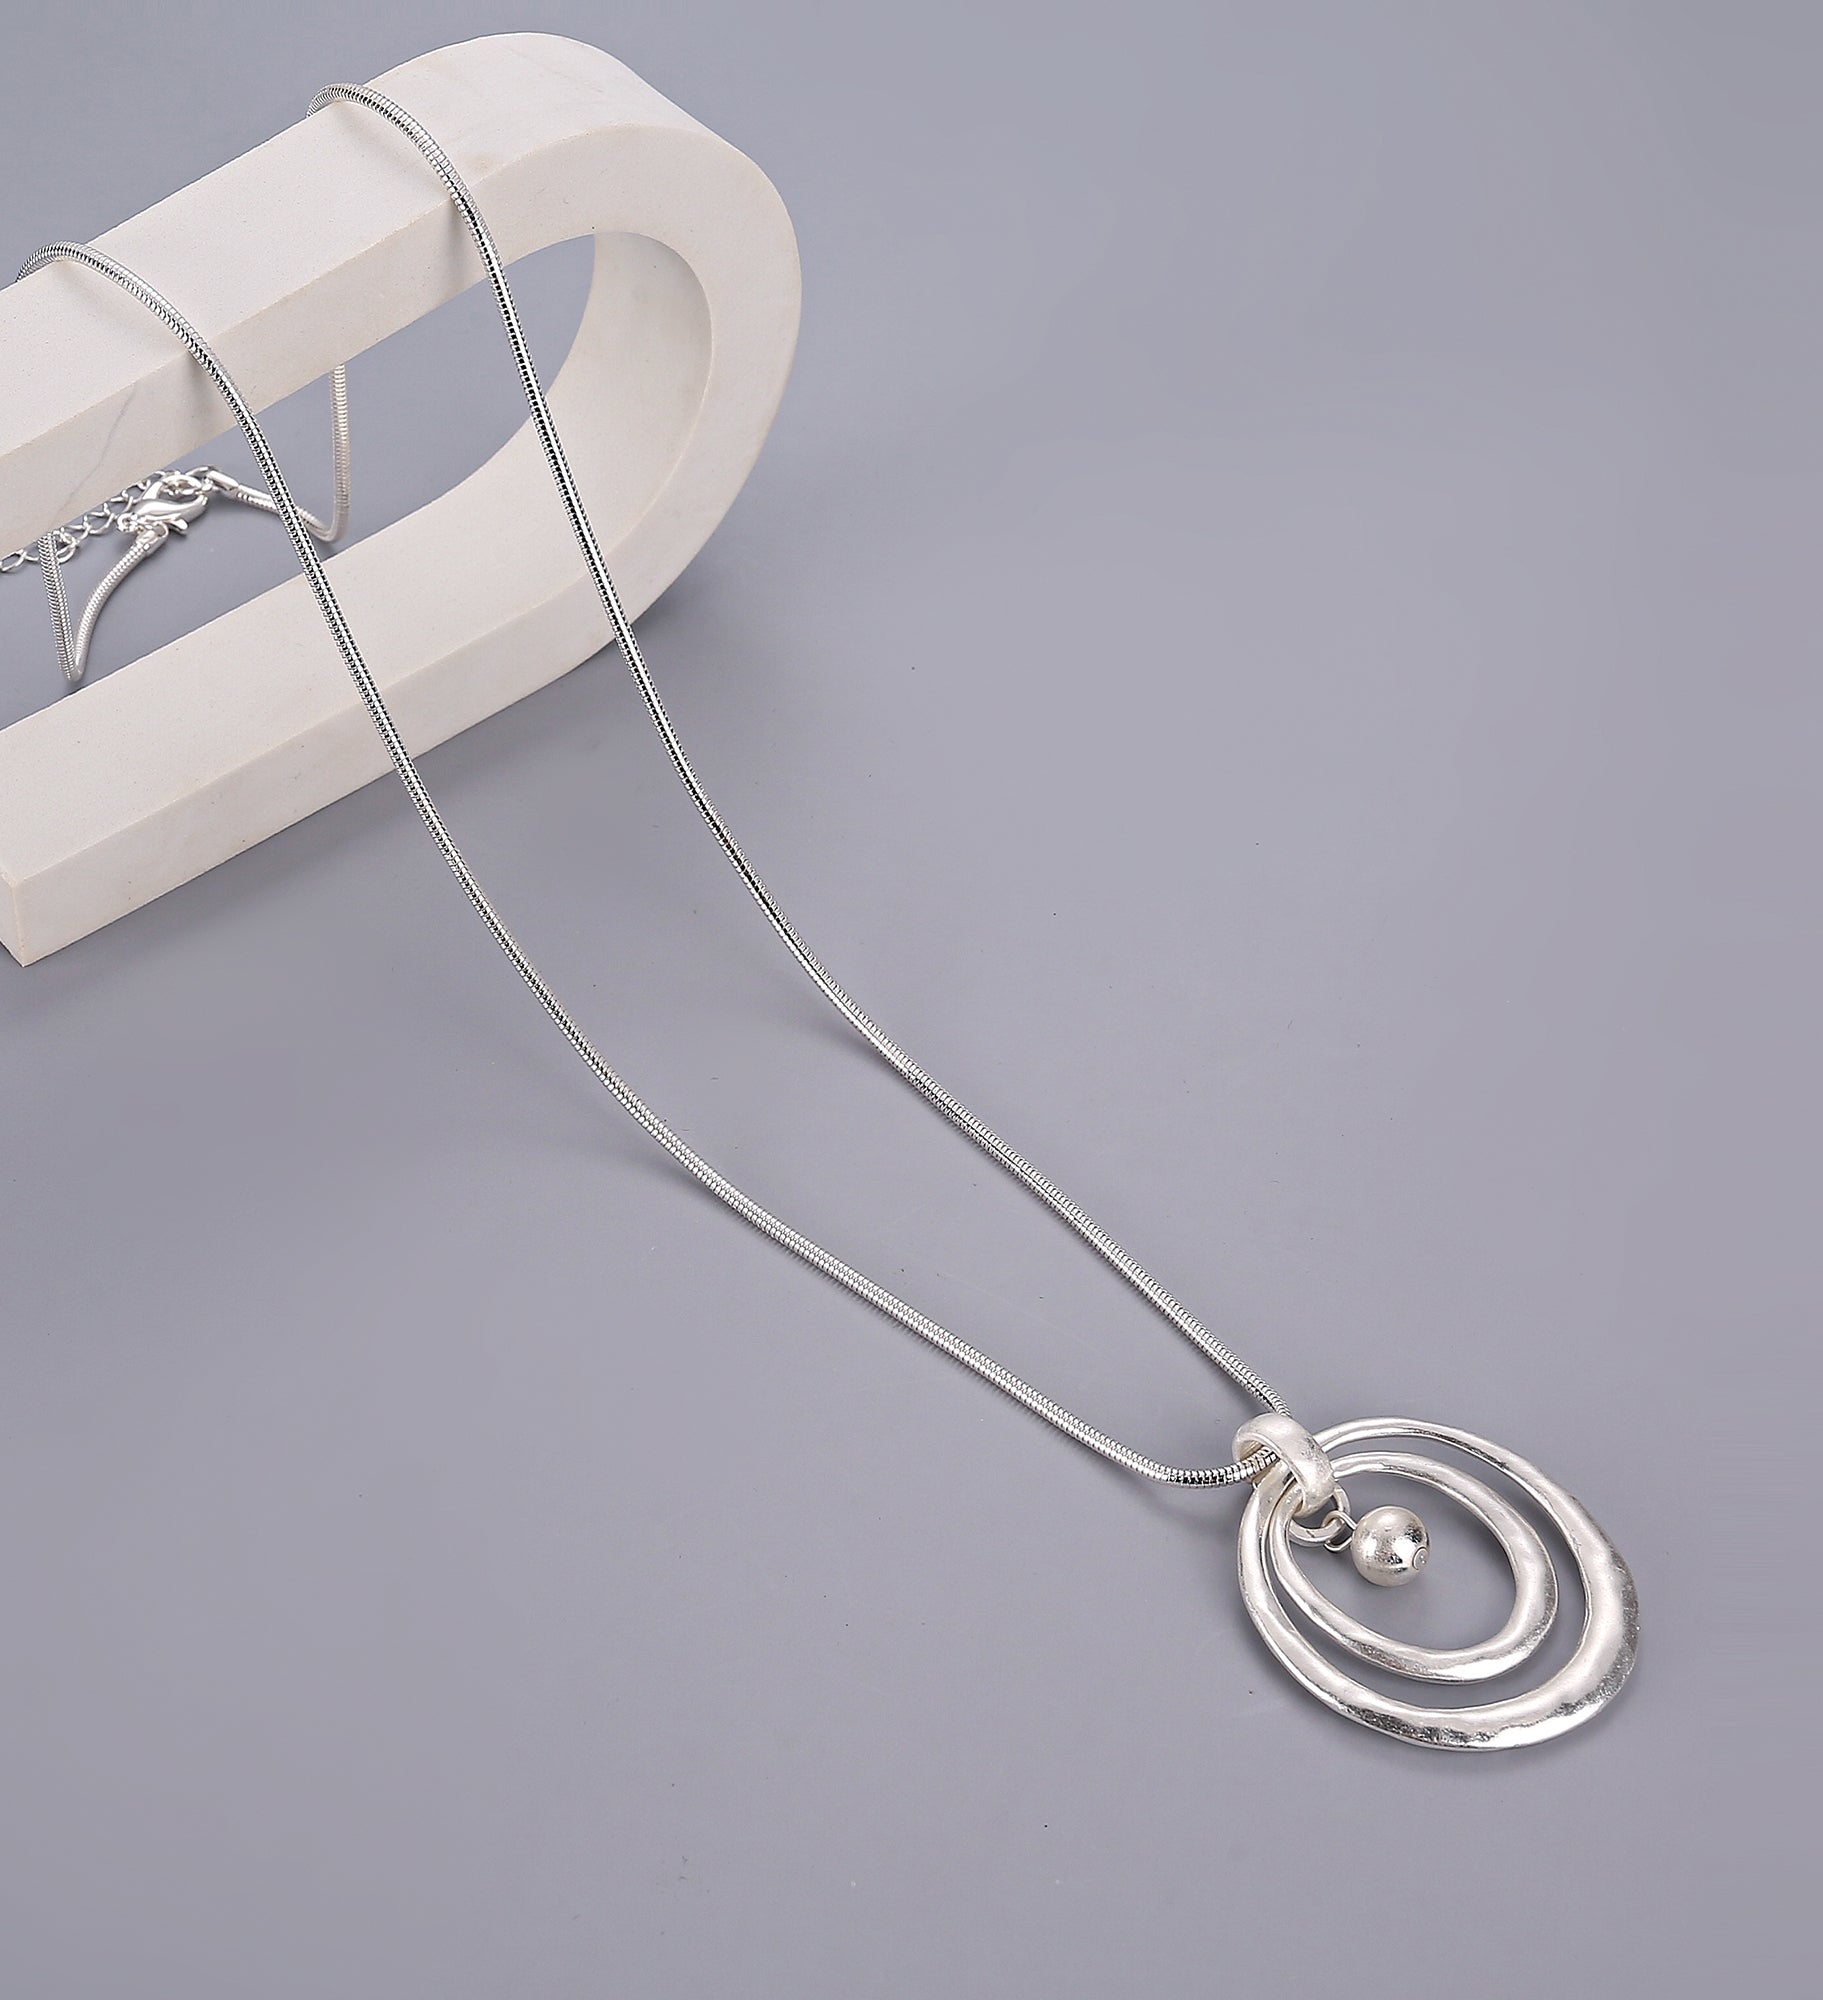 Matt Circle Necklace - The Nancy Smillie Shop - Art, Jewellery & Designer Gifts Glasgow